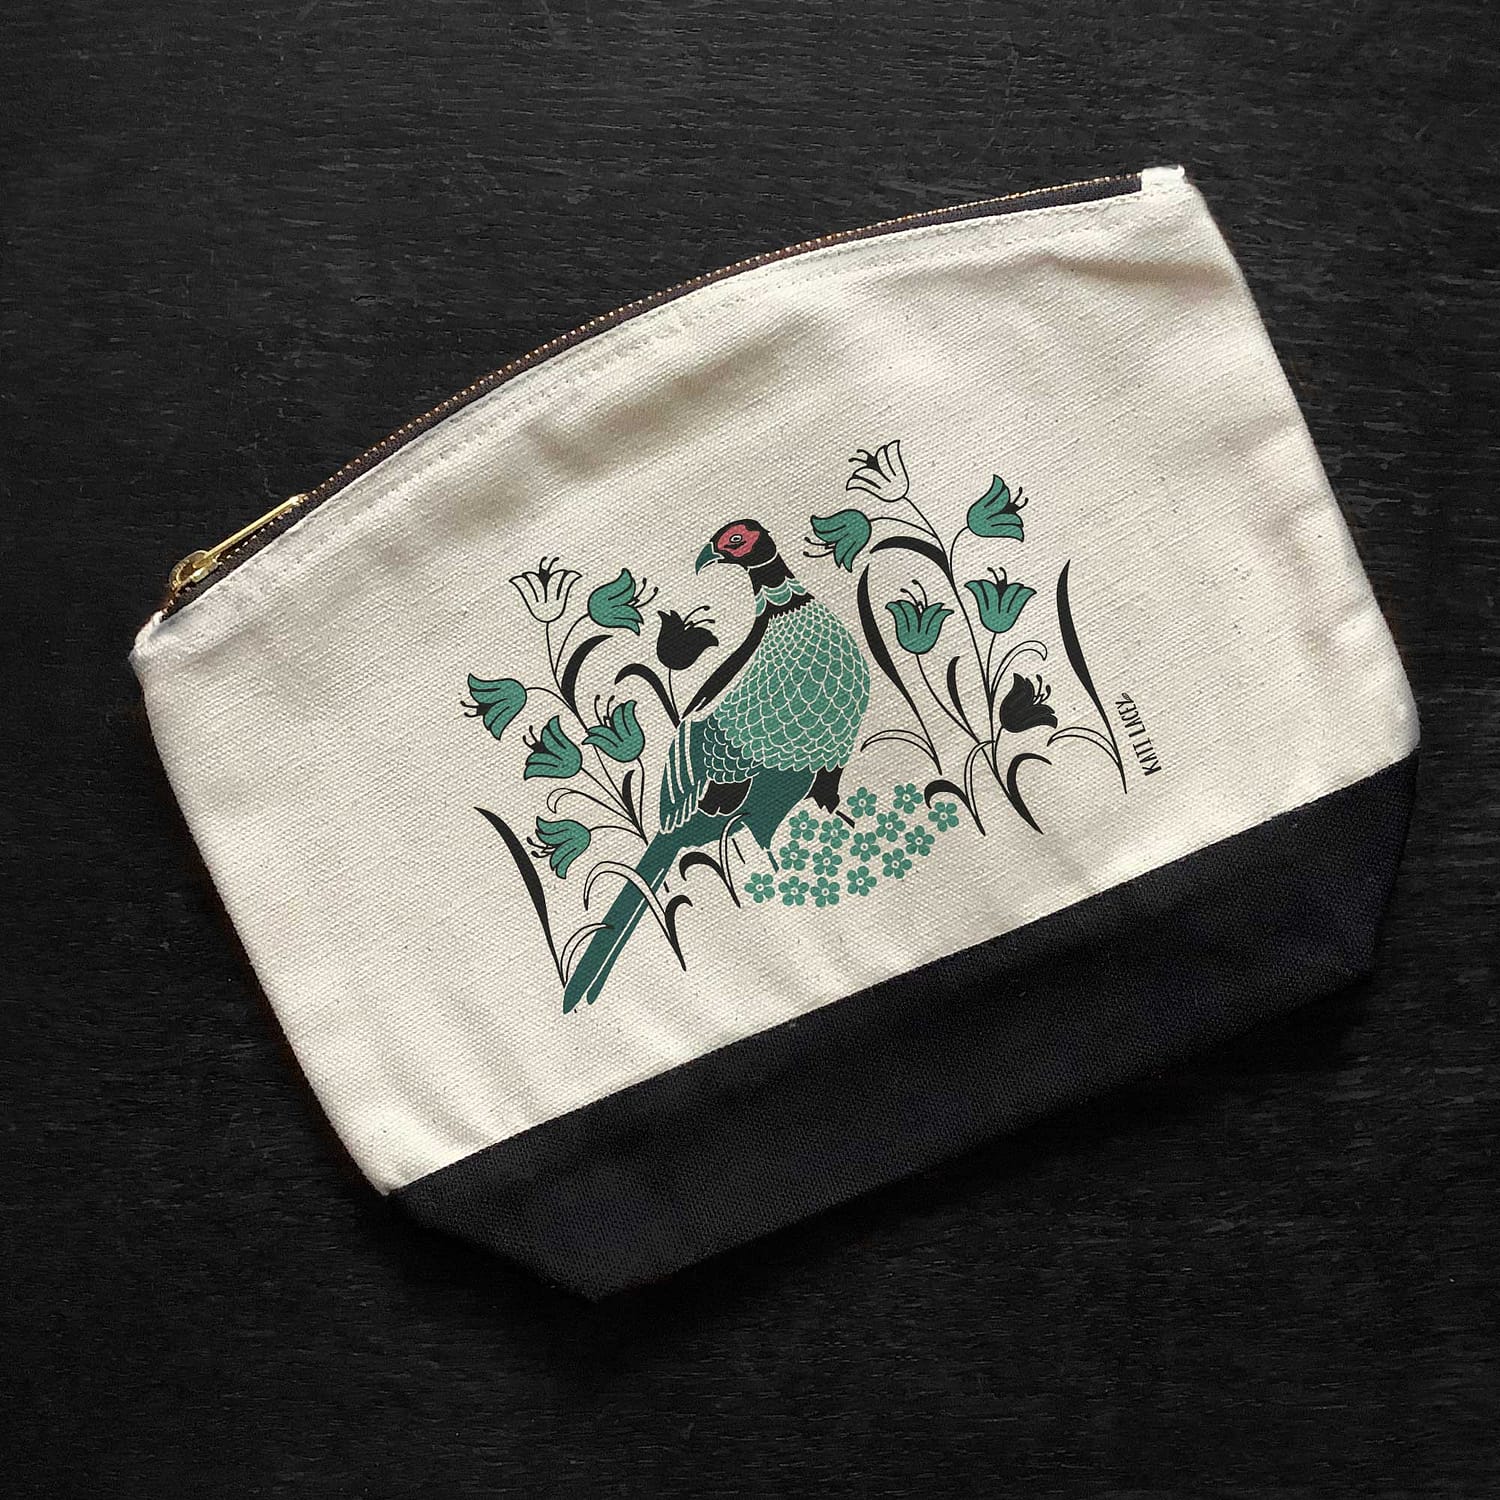 Pheasant on pouch-washbag-toiletry bag-pencil case-make up bag-storage bag for travel-medication bag-luxury